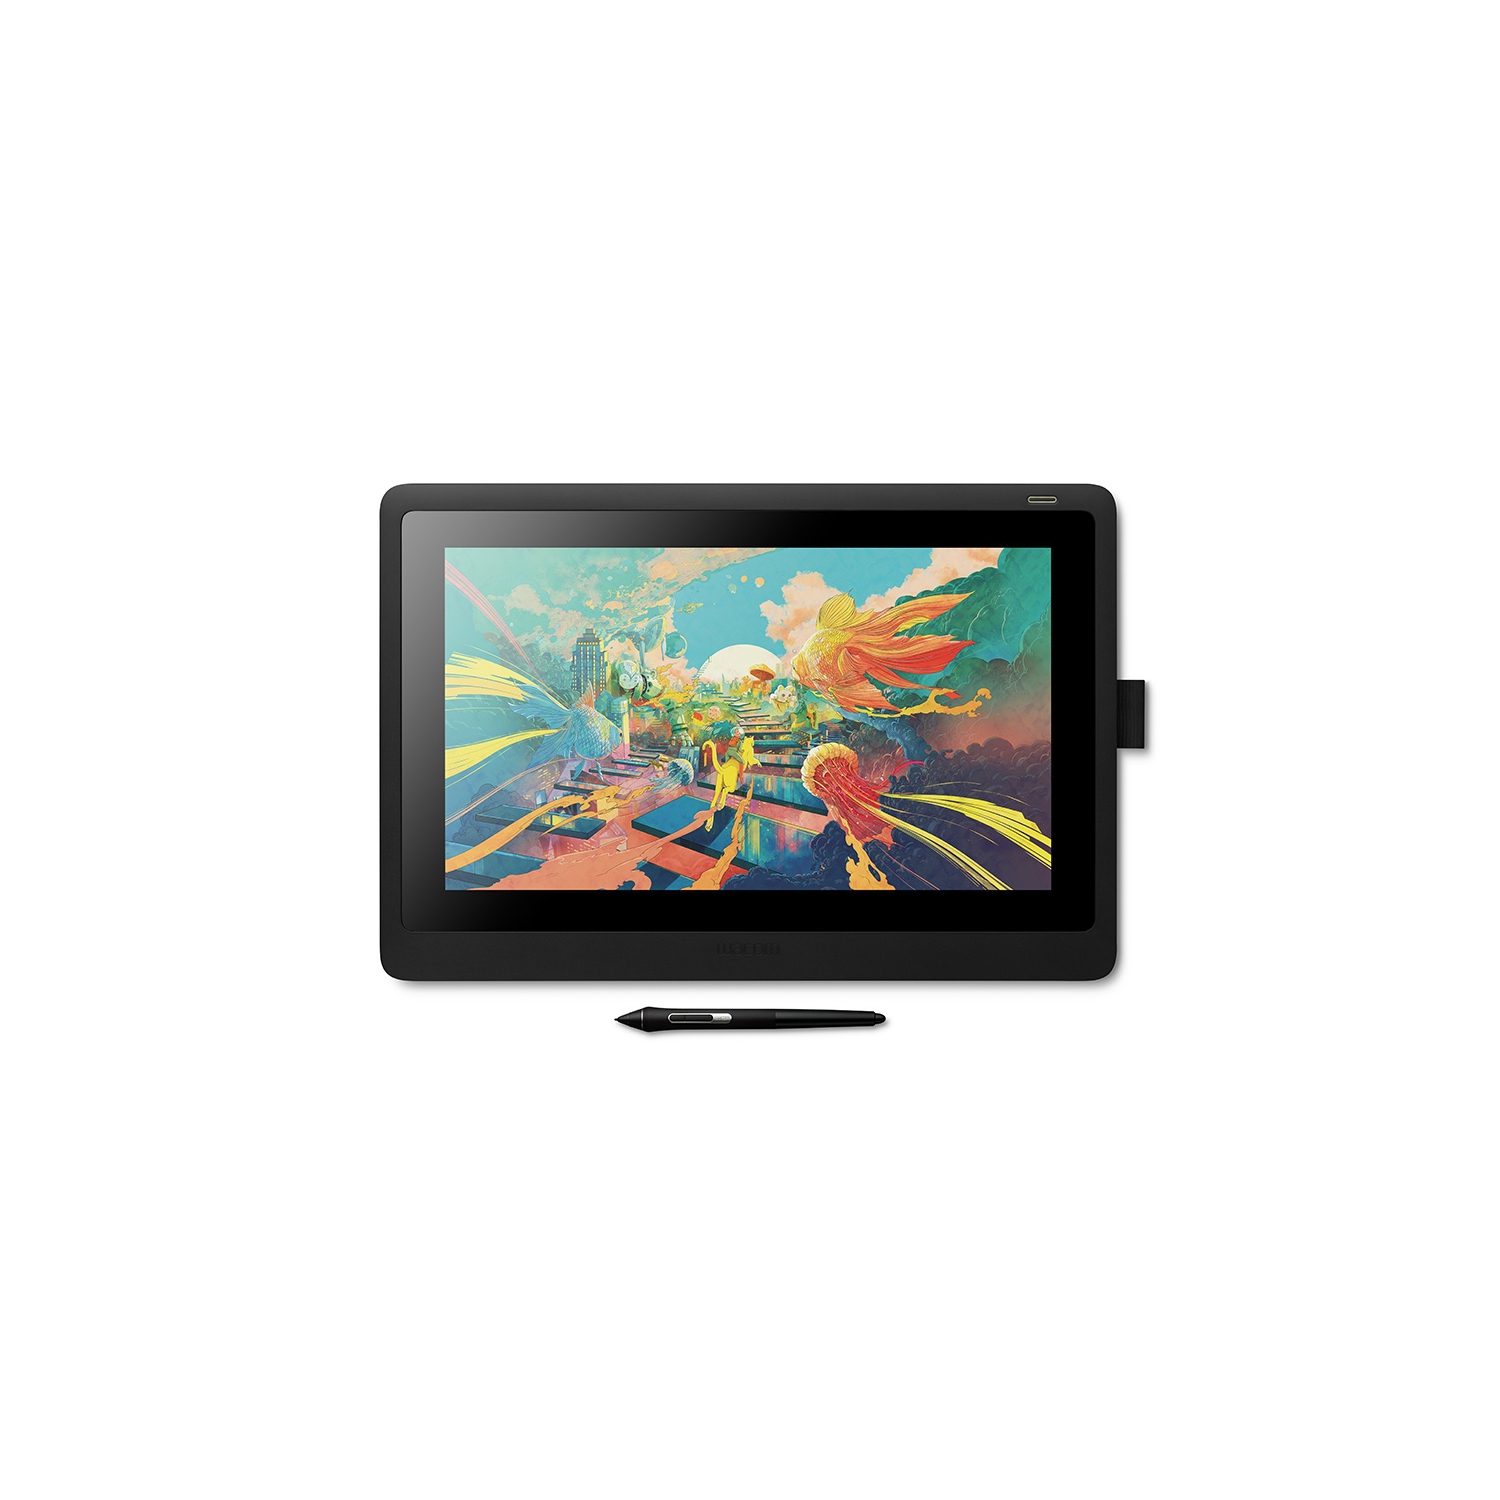 Wacom Cintiq 22 18.7" x 10.5" Graphic Tablet with Stylus - (DTK2260K0A)